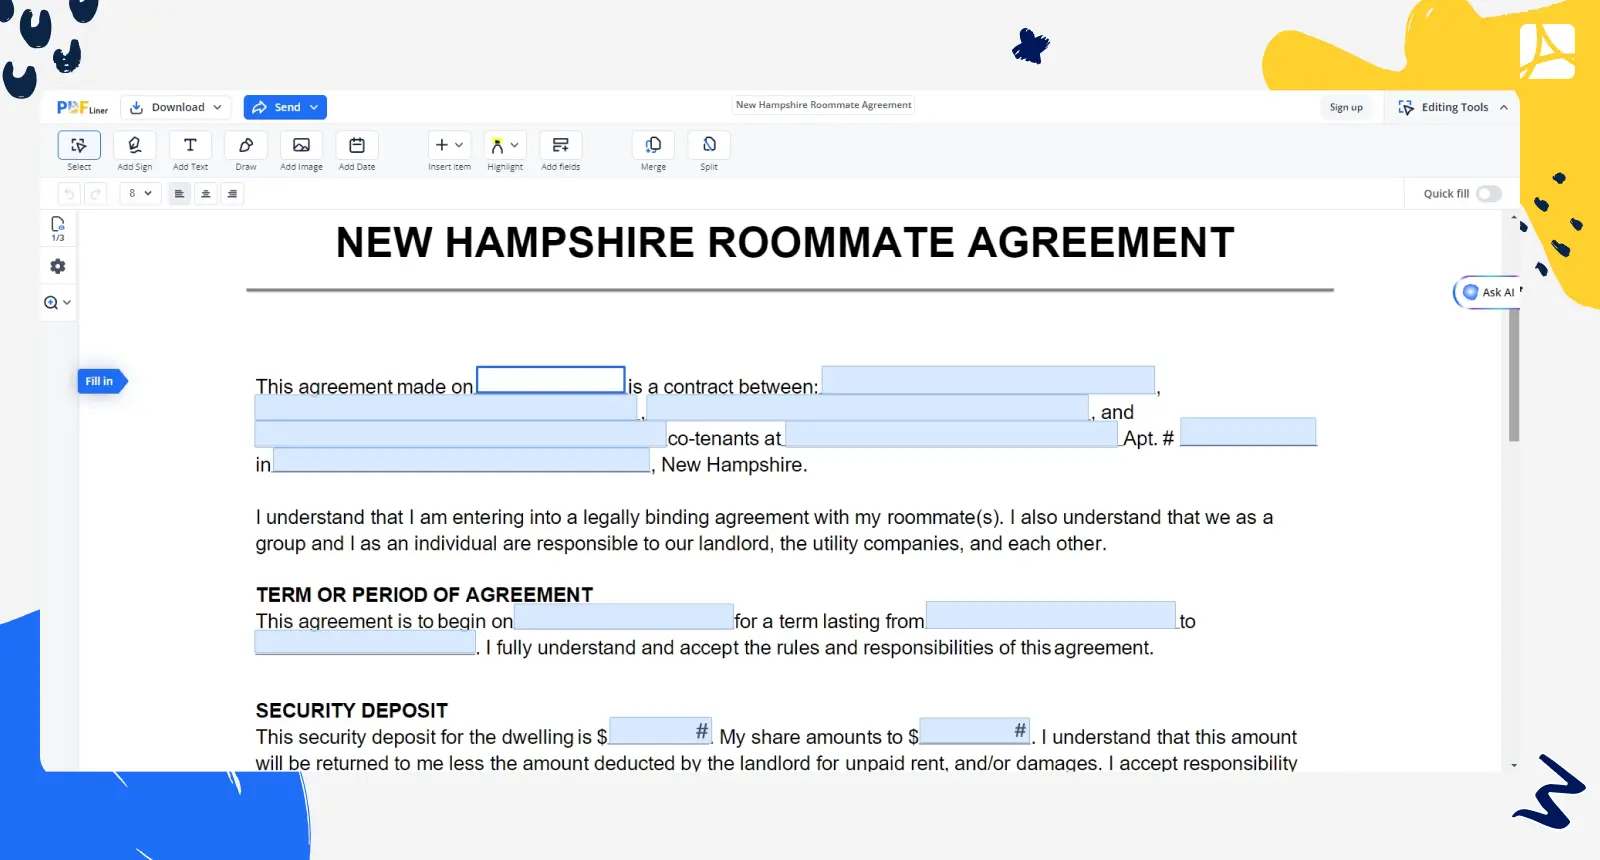 New Hampshire Roommate Agreement PDFLiner screenshot